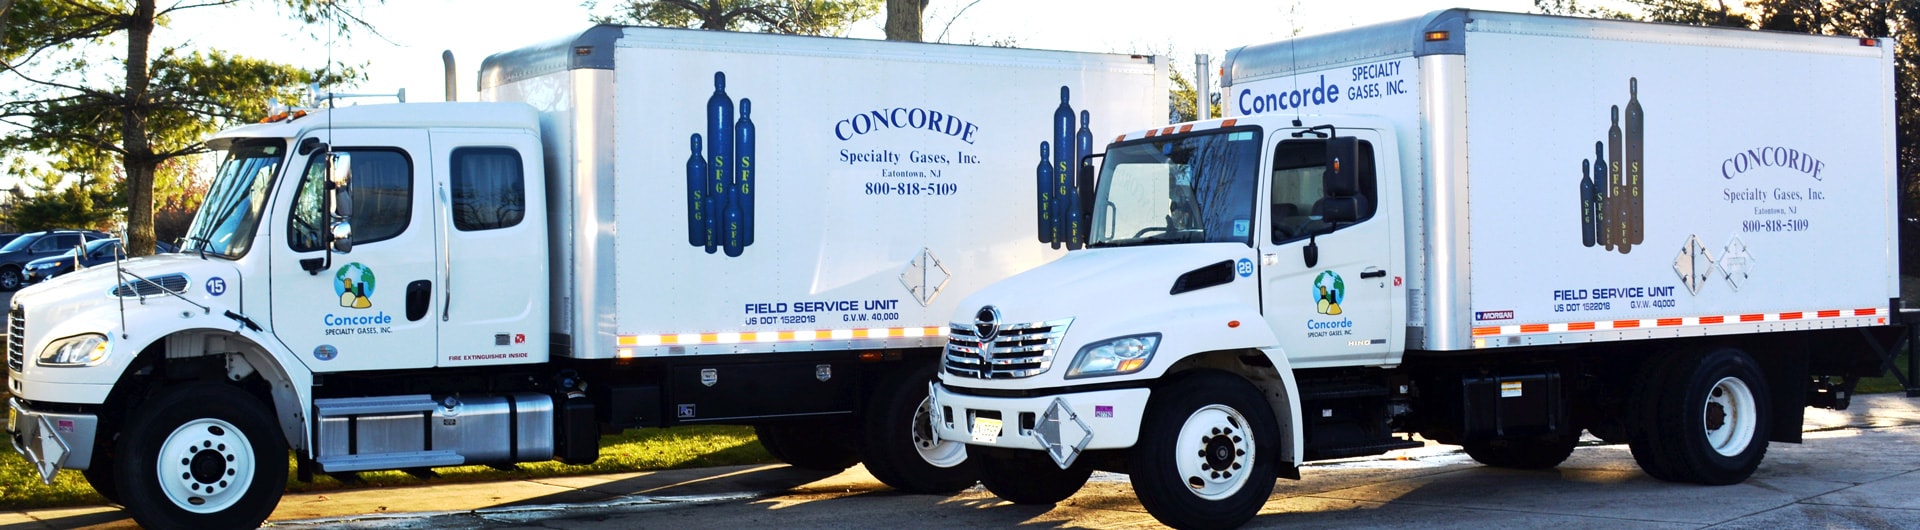 SF6 Gas global provider - Concorde Specialty Gases, Inc., 36 Eaton Road, Eatontown, NJ 07724 USA